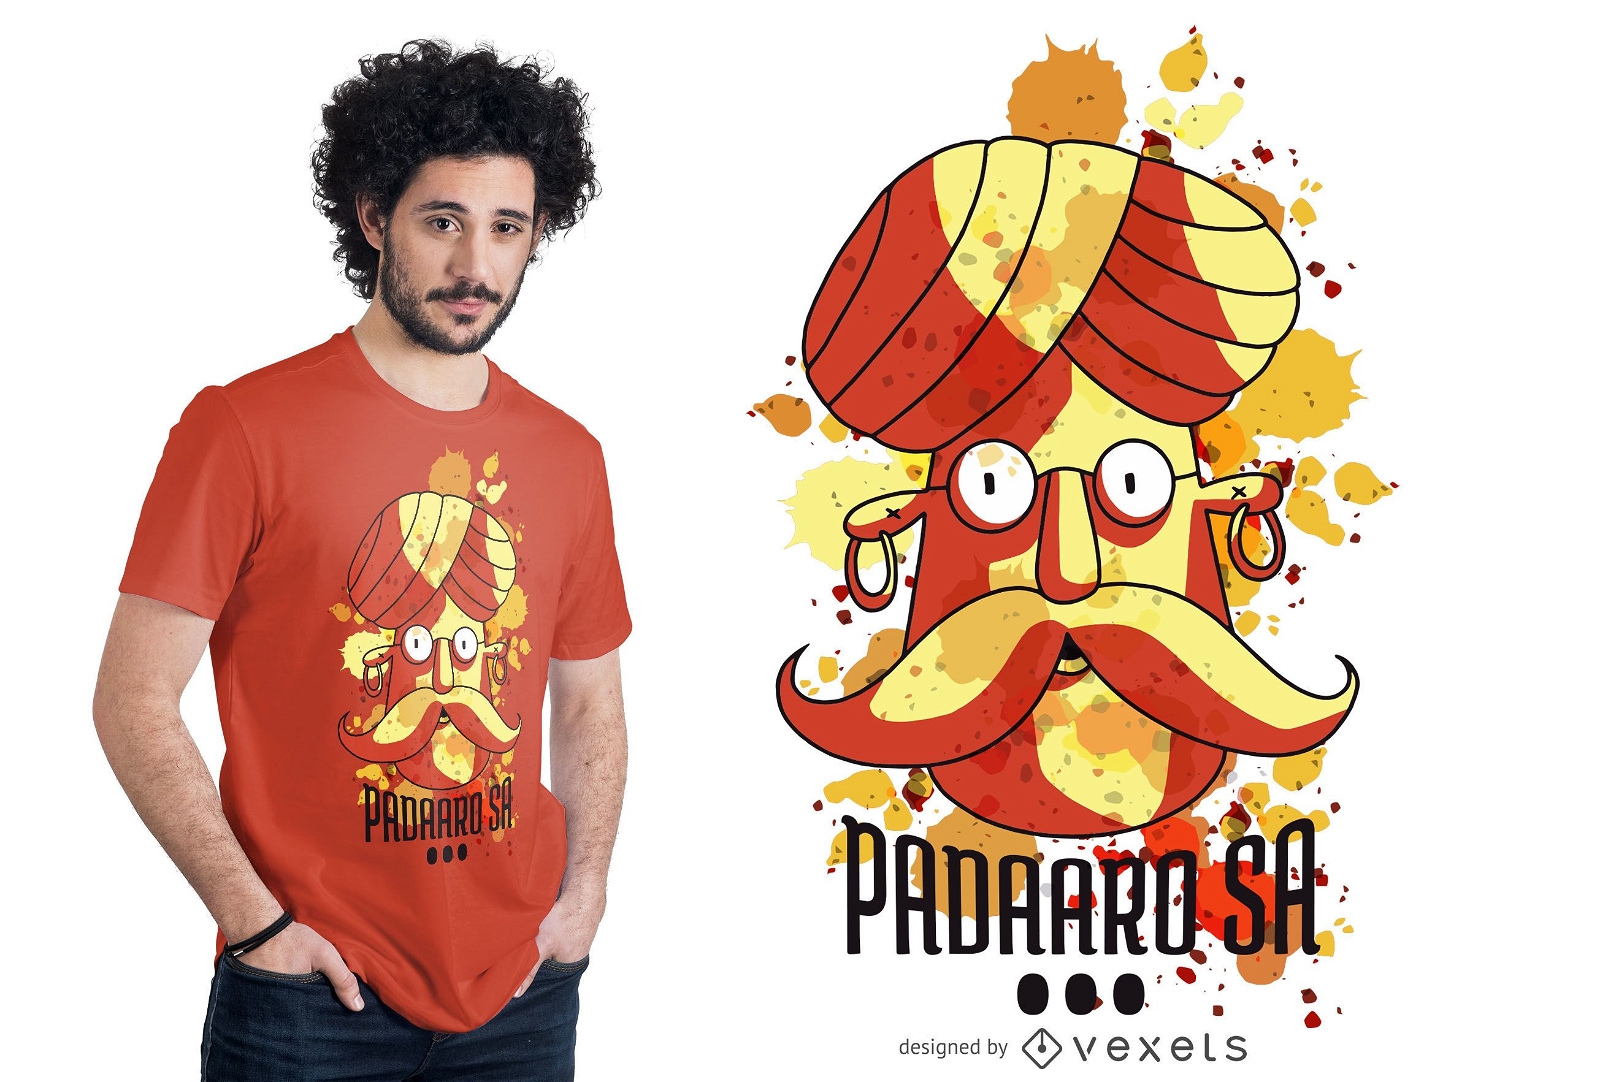 Pandaaro Sa t-shirt design